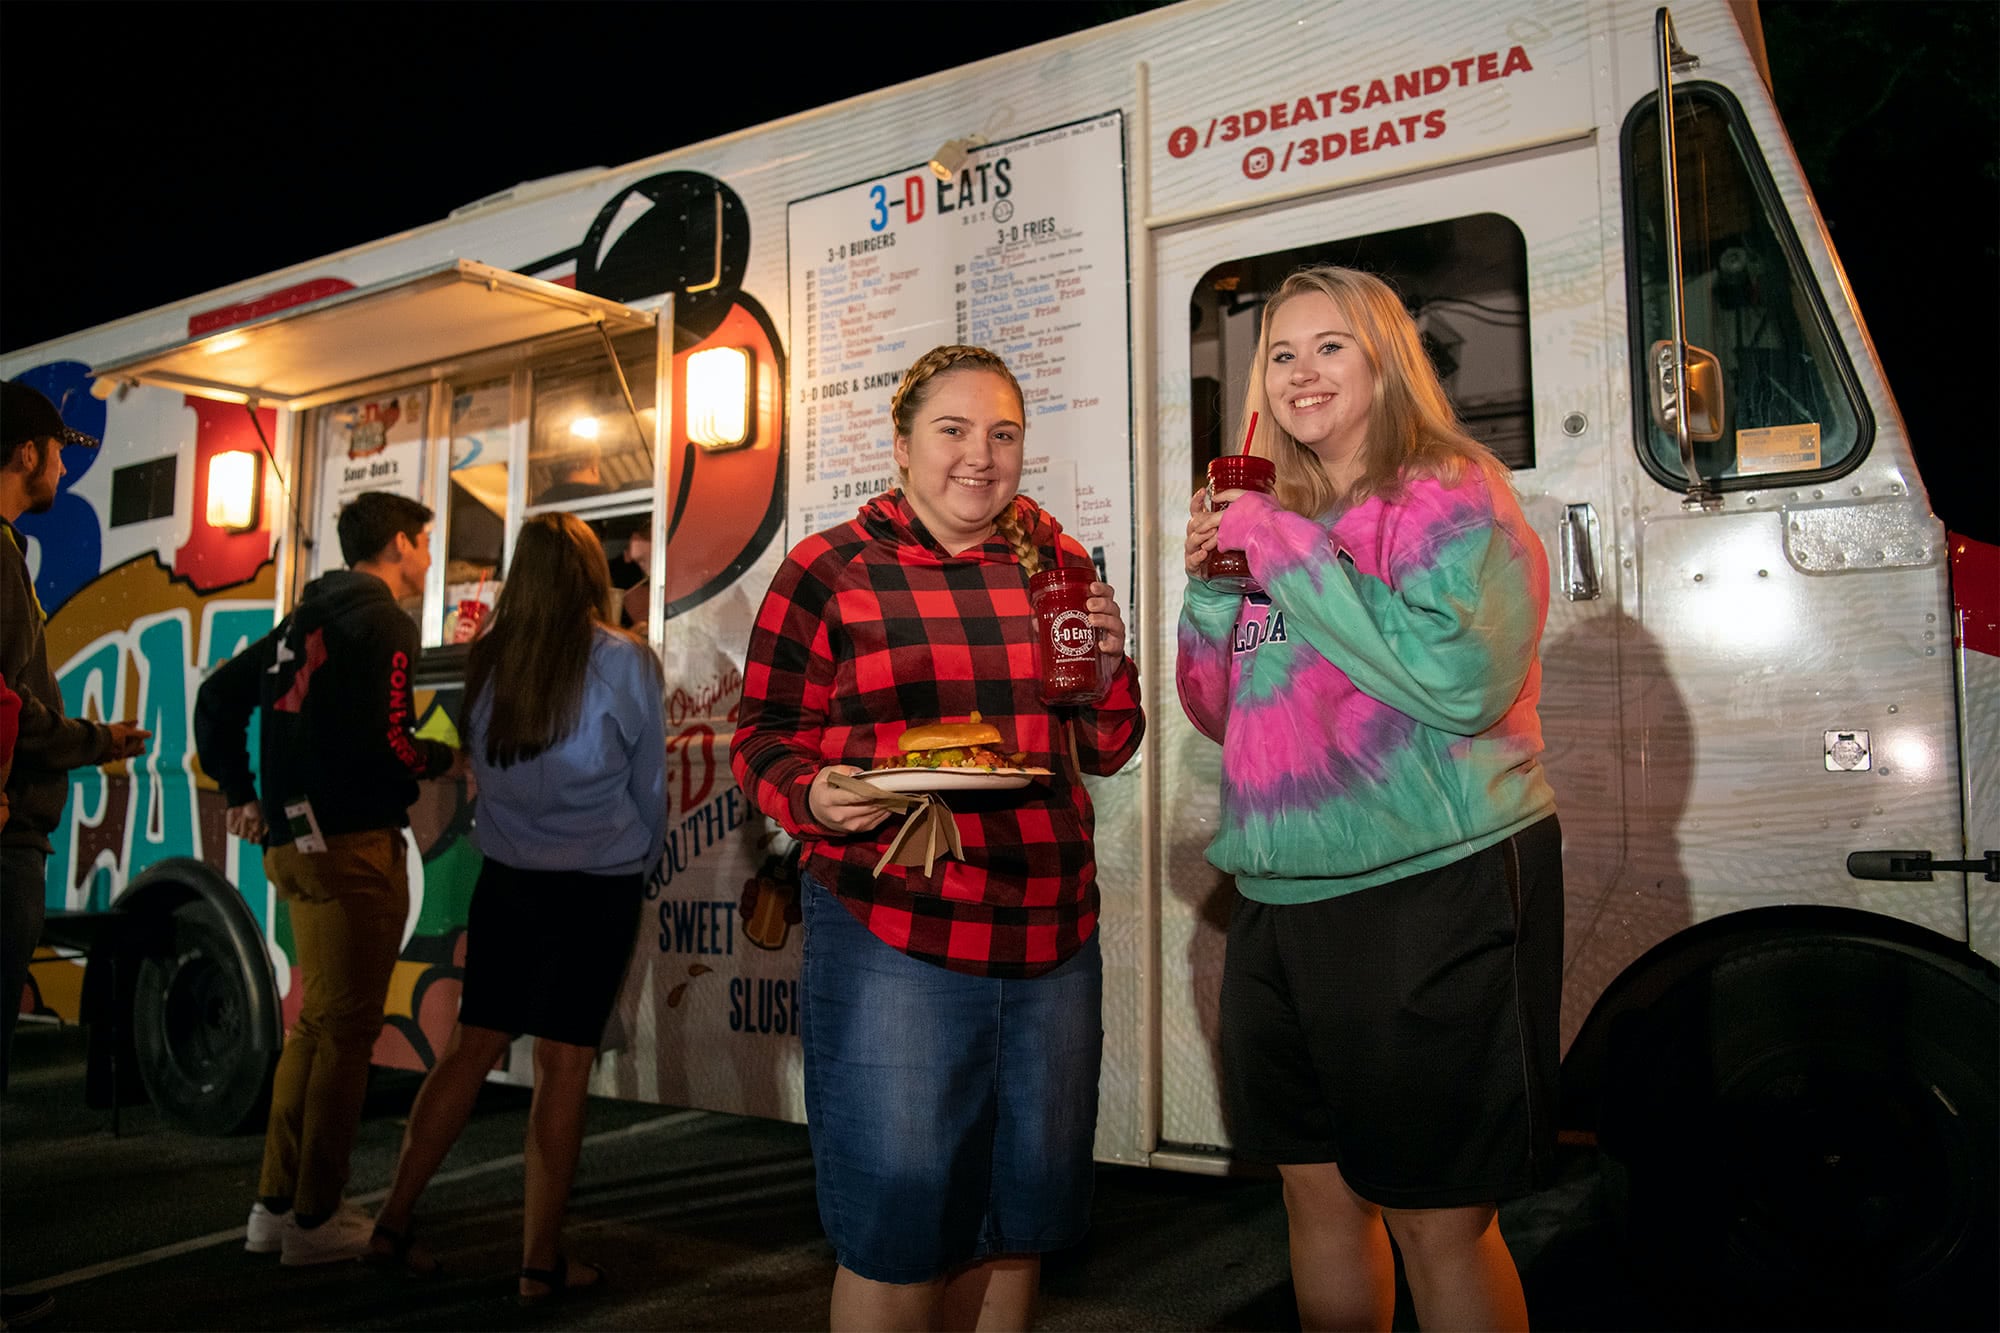 Students got concessions from a 3D Eats food truck